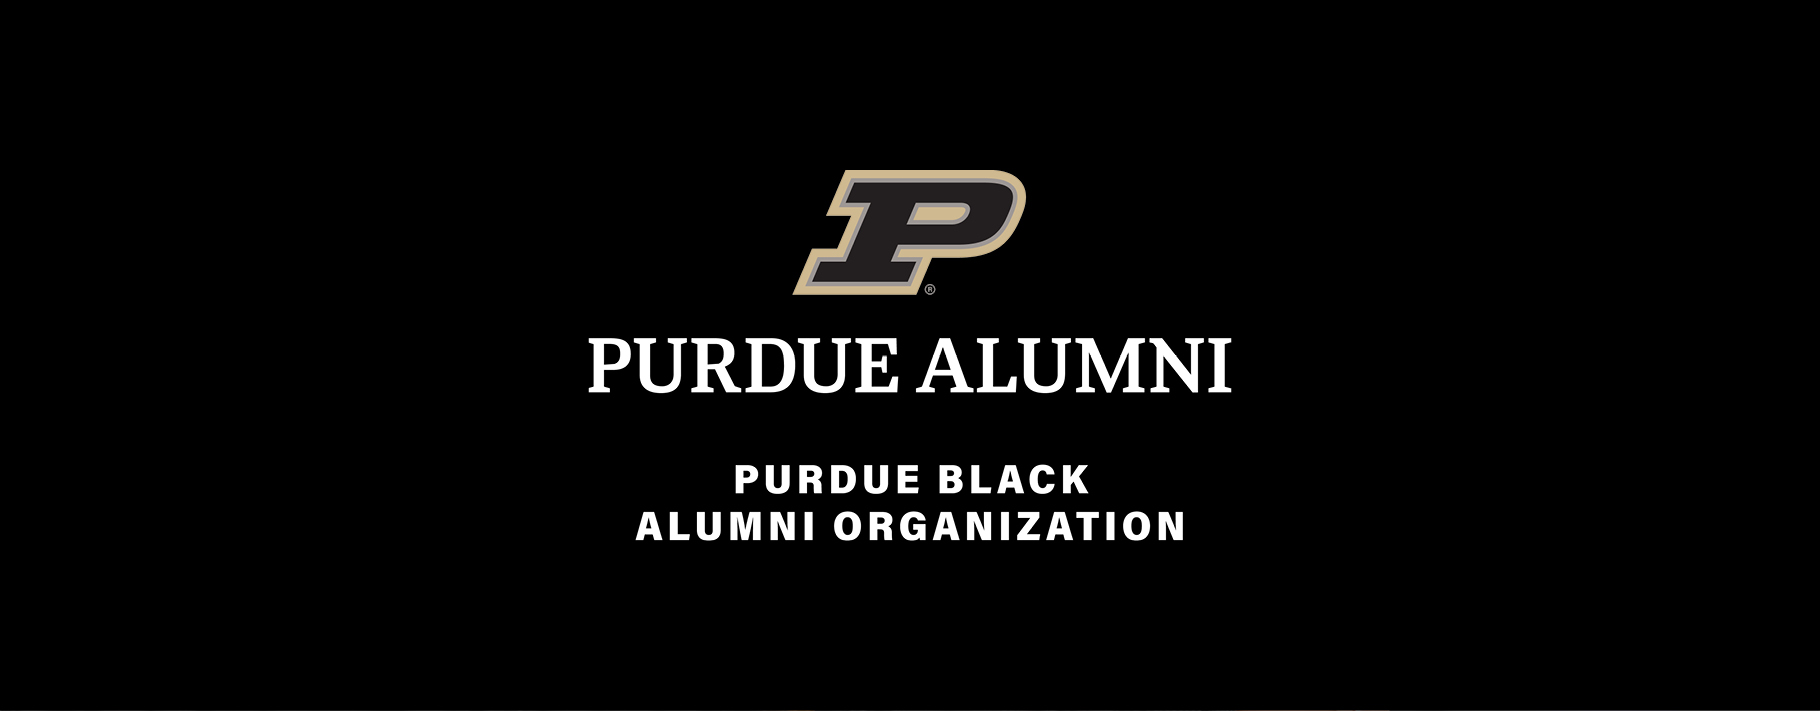 Purdue Black Alumni Organization